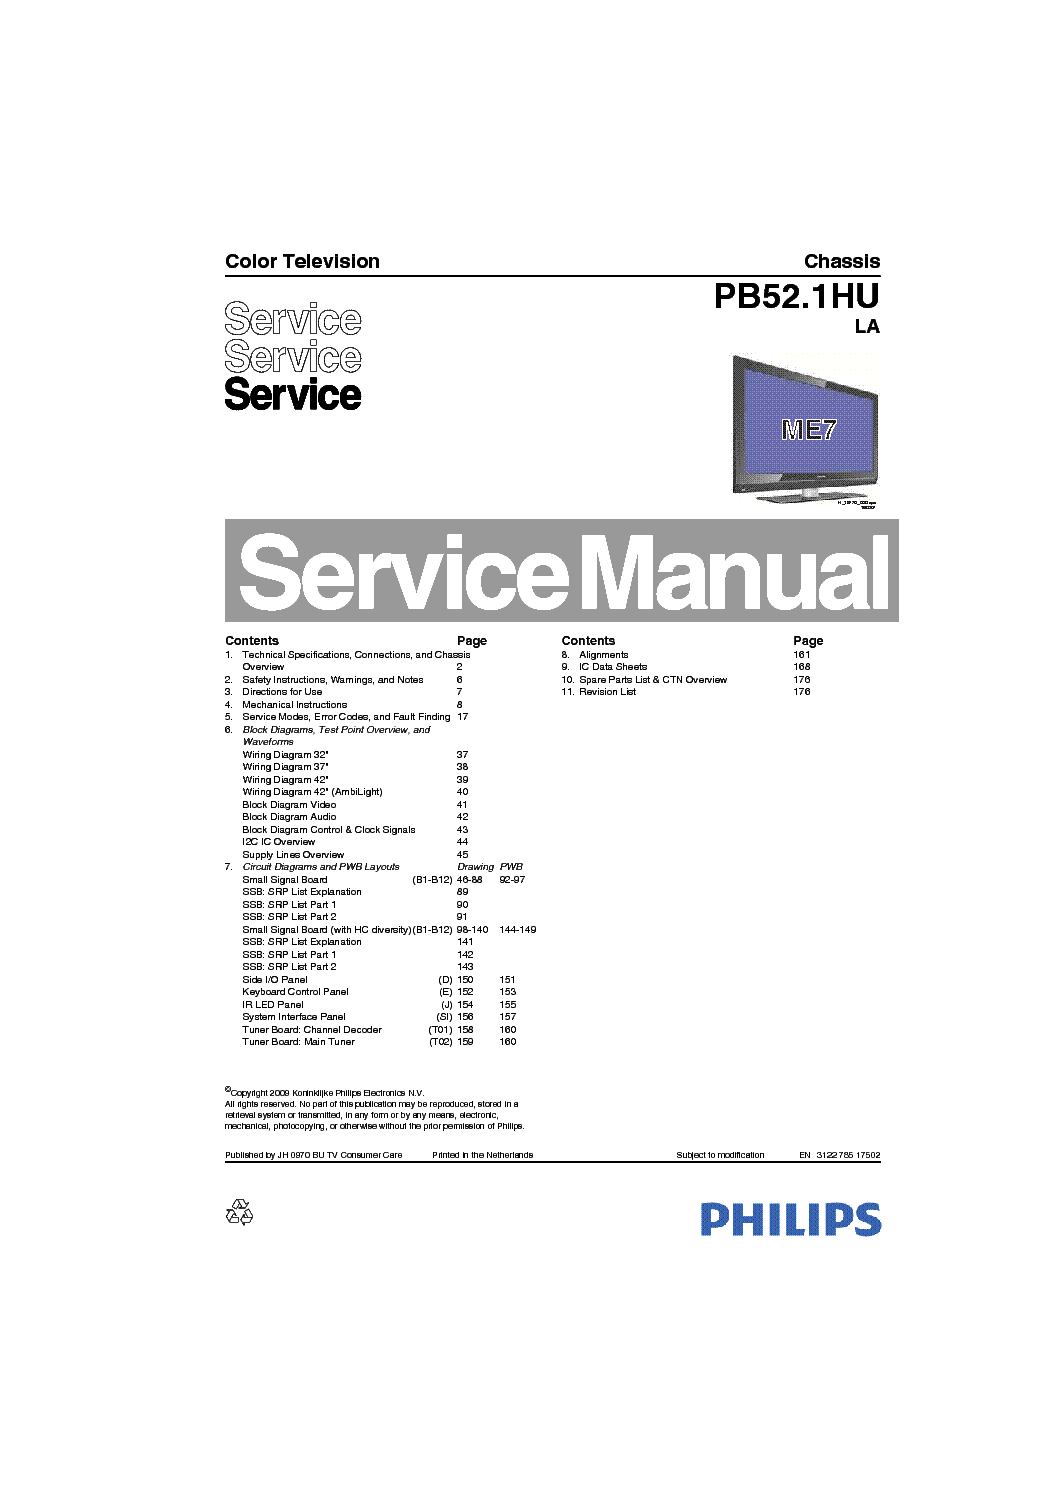 PHILIPS PB52.1HU LA CHASSIS LCD TV SM service manual (1st page)